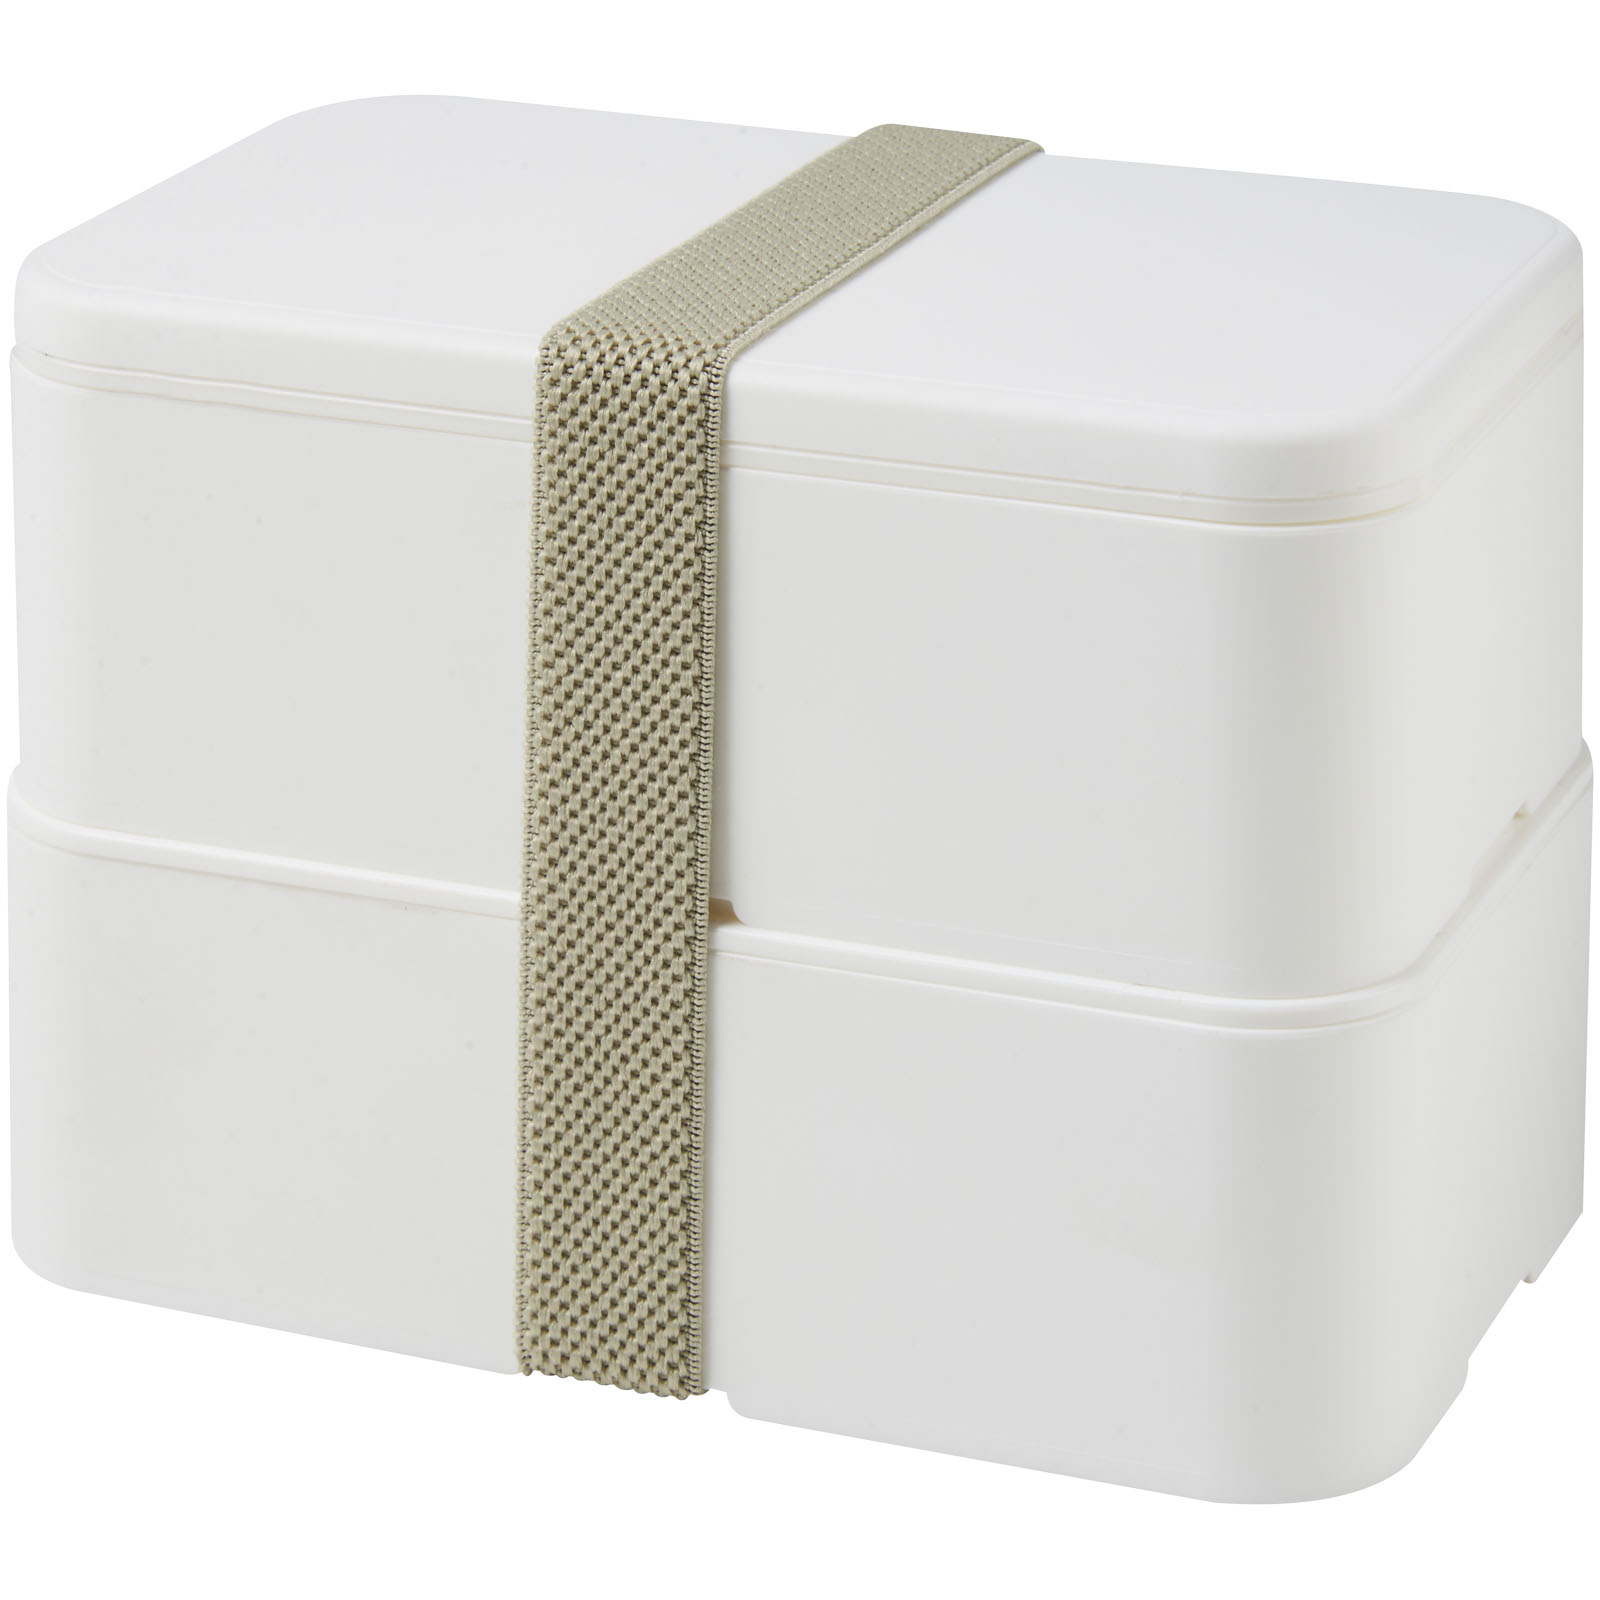 Home & Kitchen - MIYO double layer lunch box